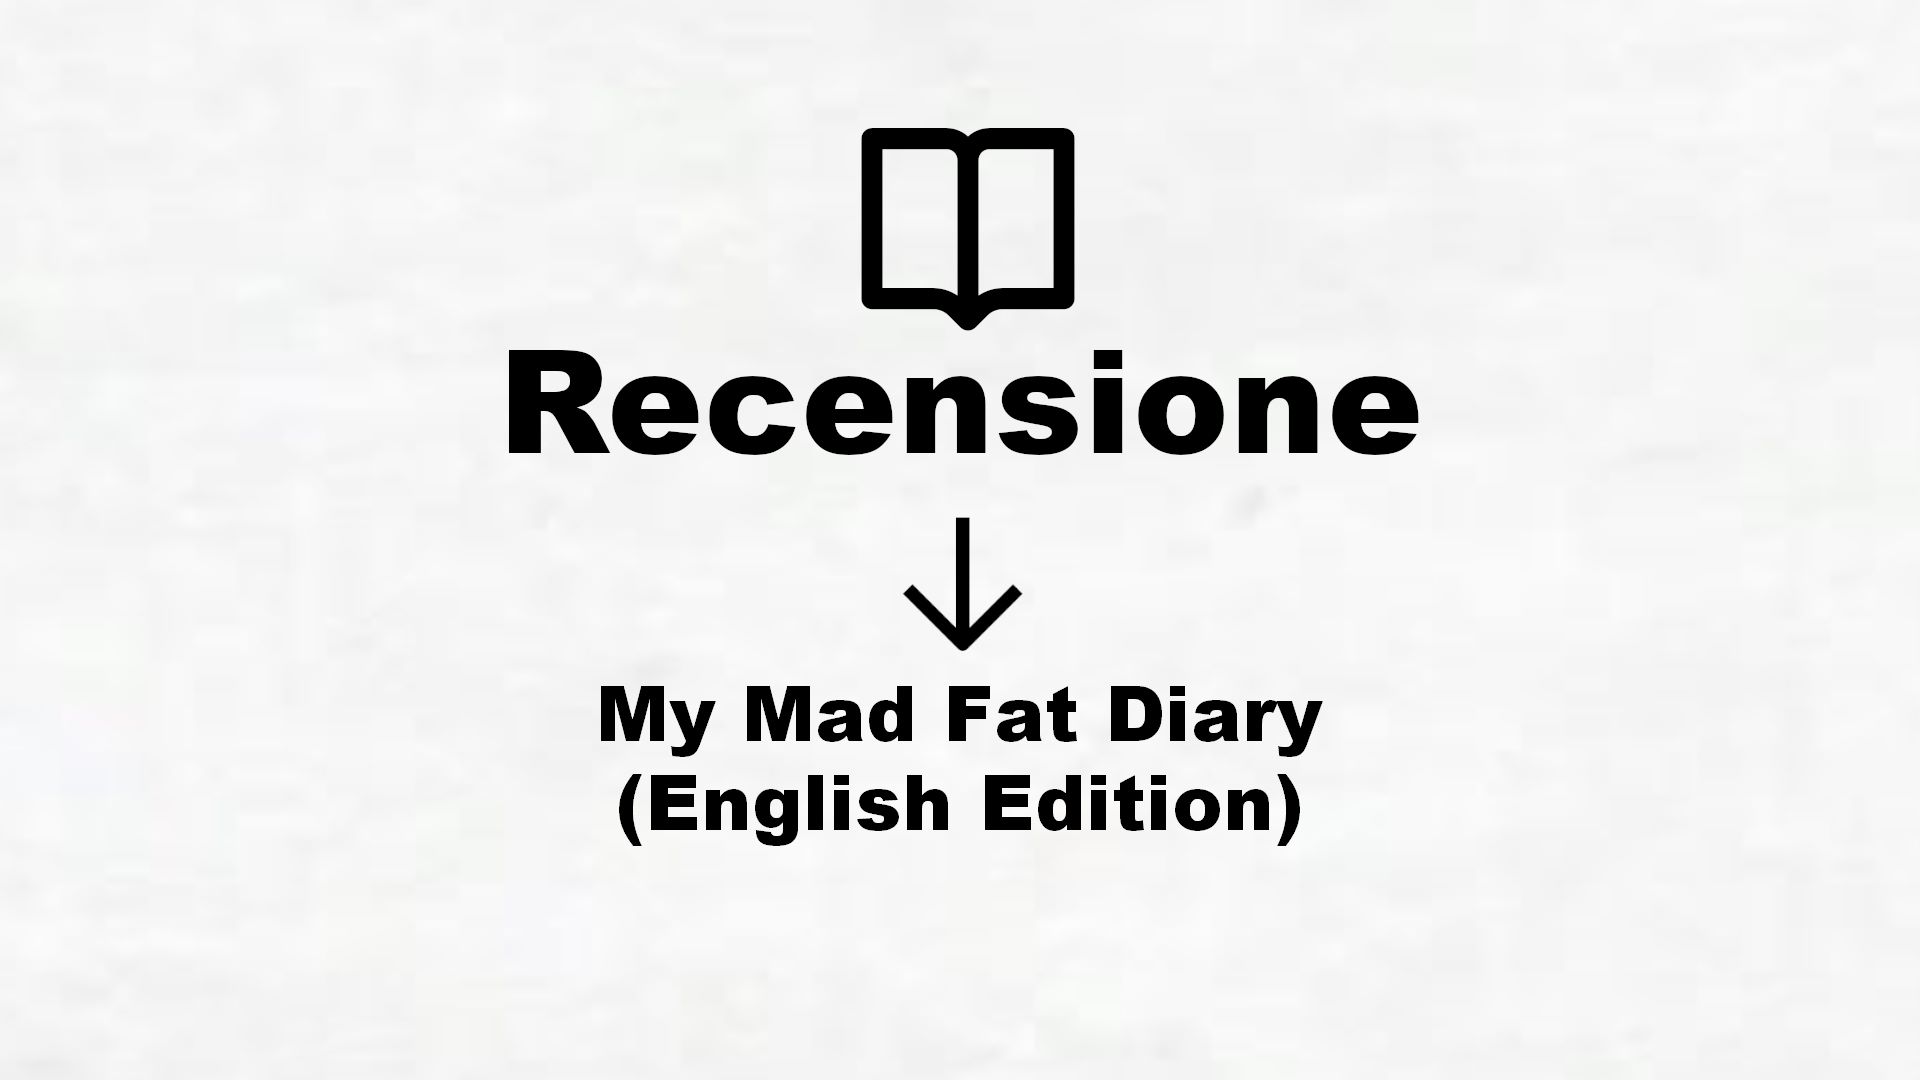 My Mad Fat Diary (English Edition) – Recensione Libro